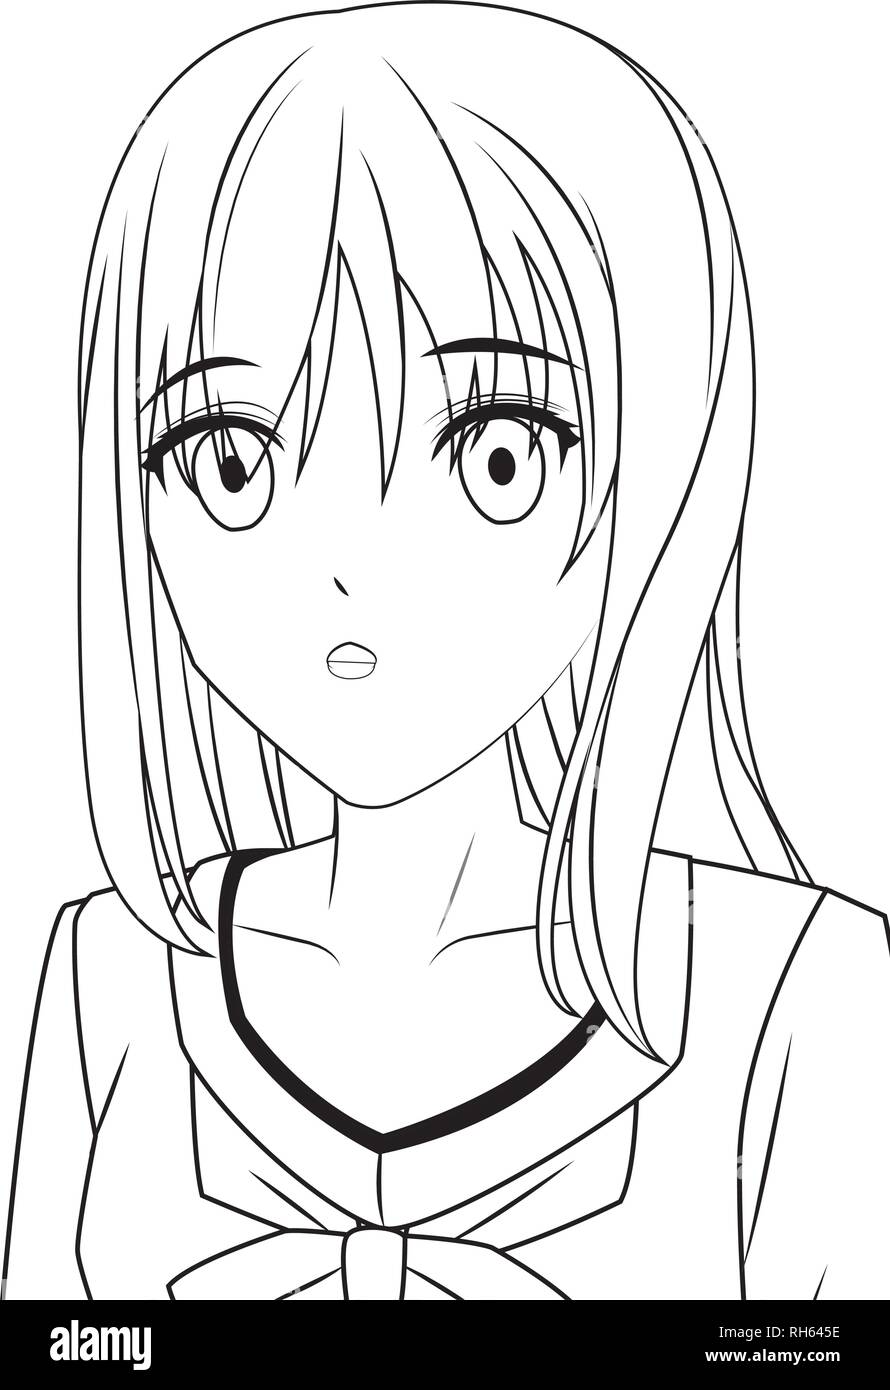 Manga anime Imágenes de stock en blanco y negro - Alamy